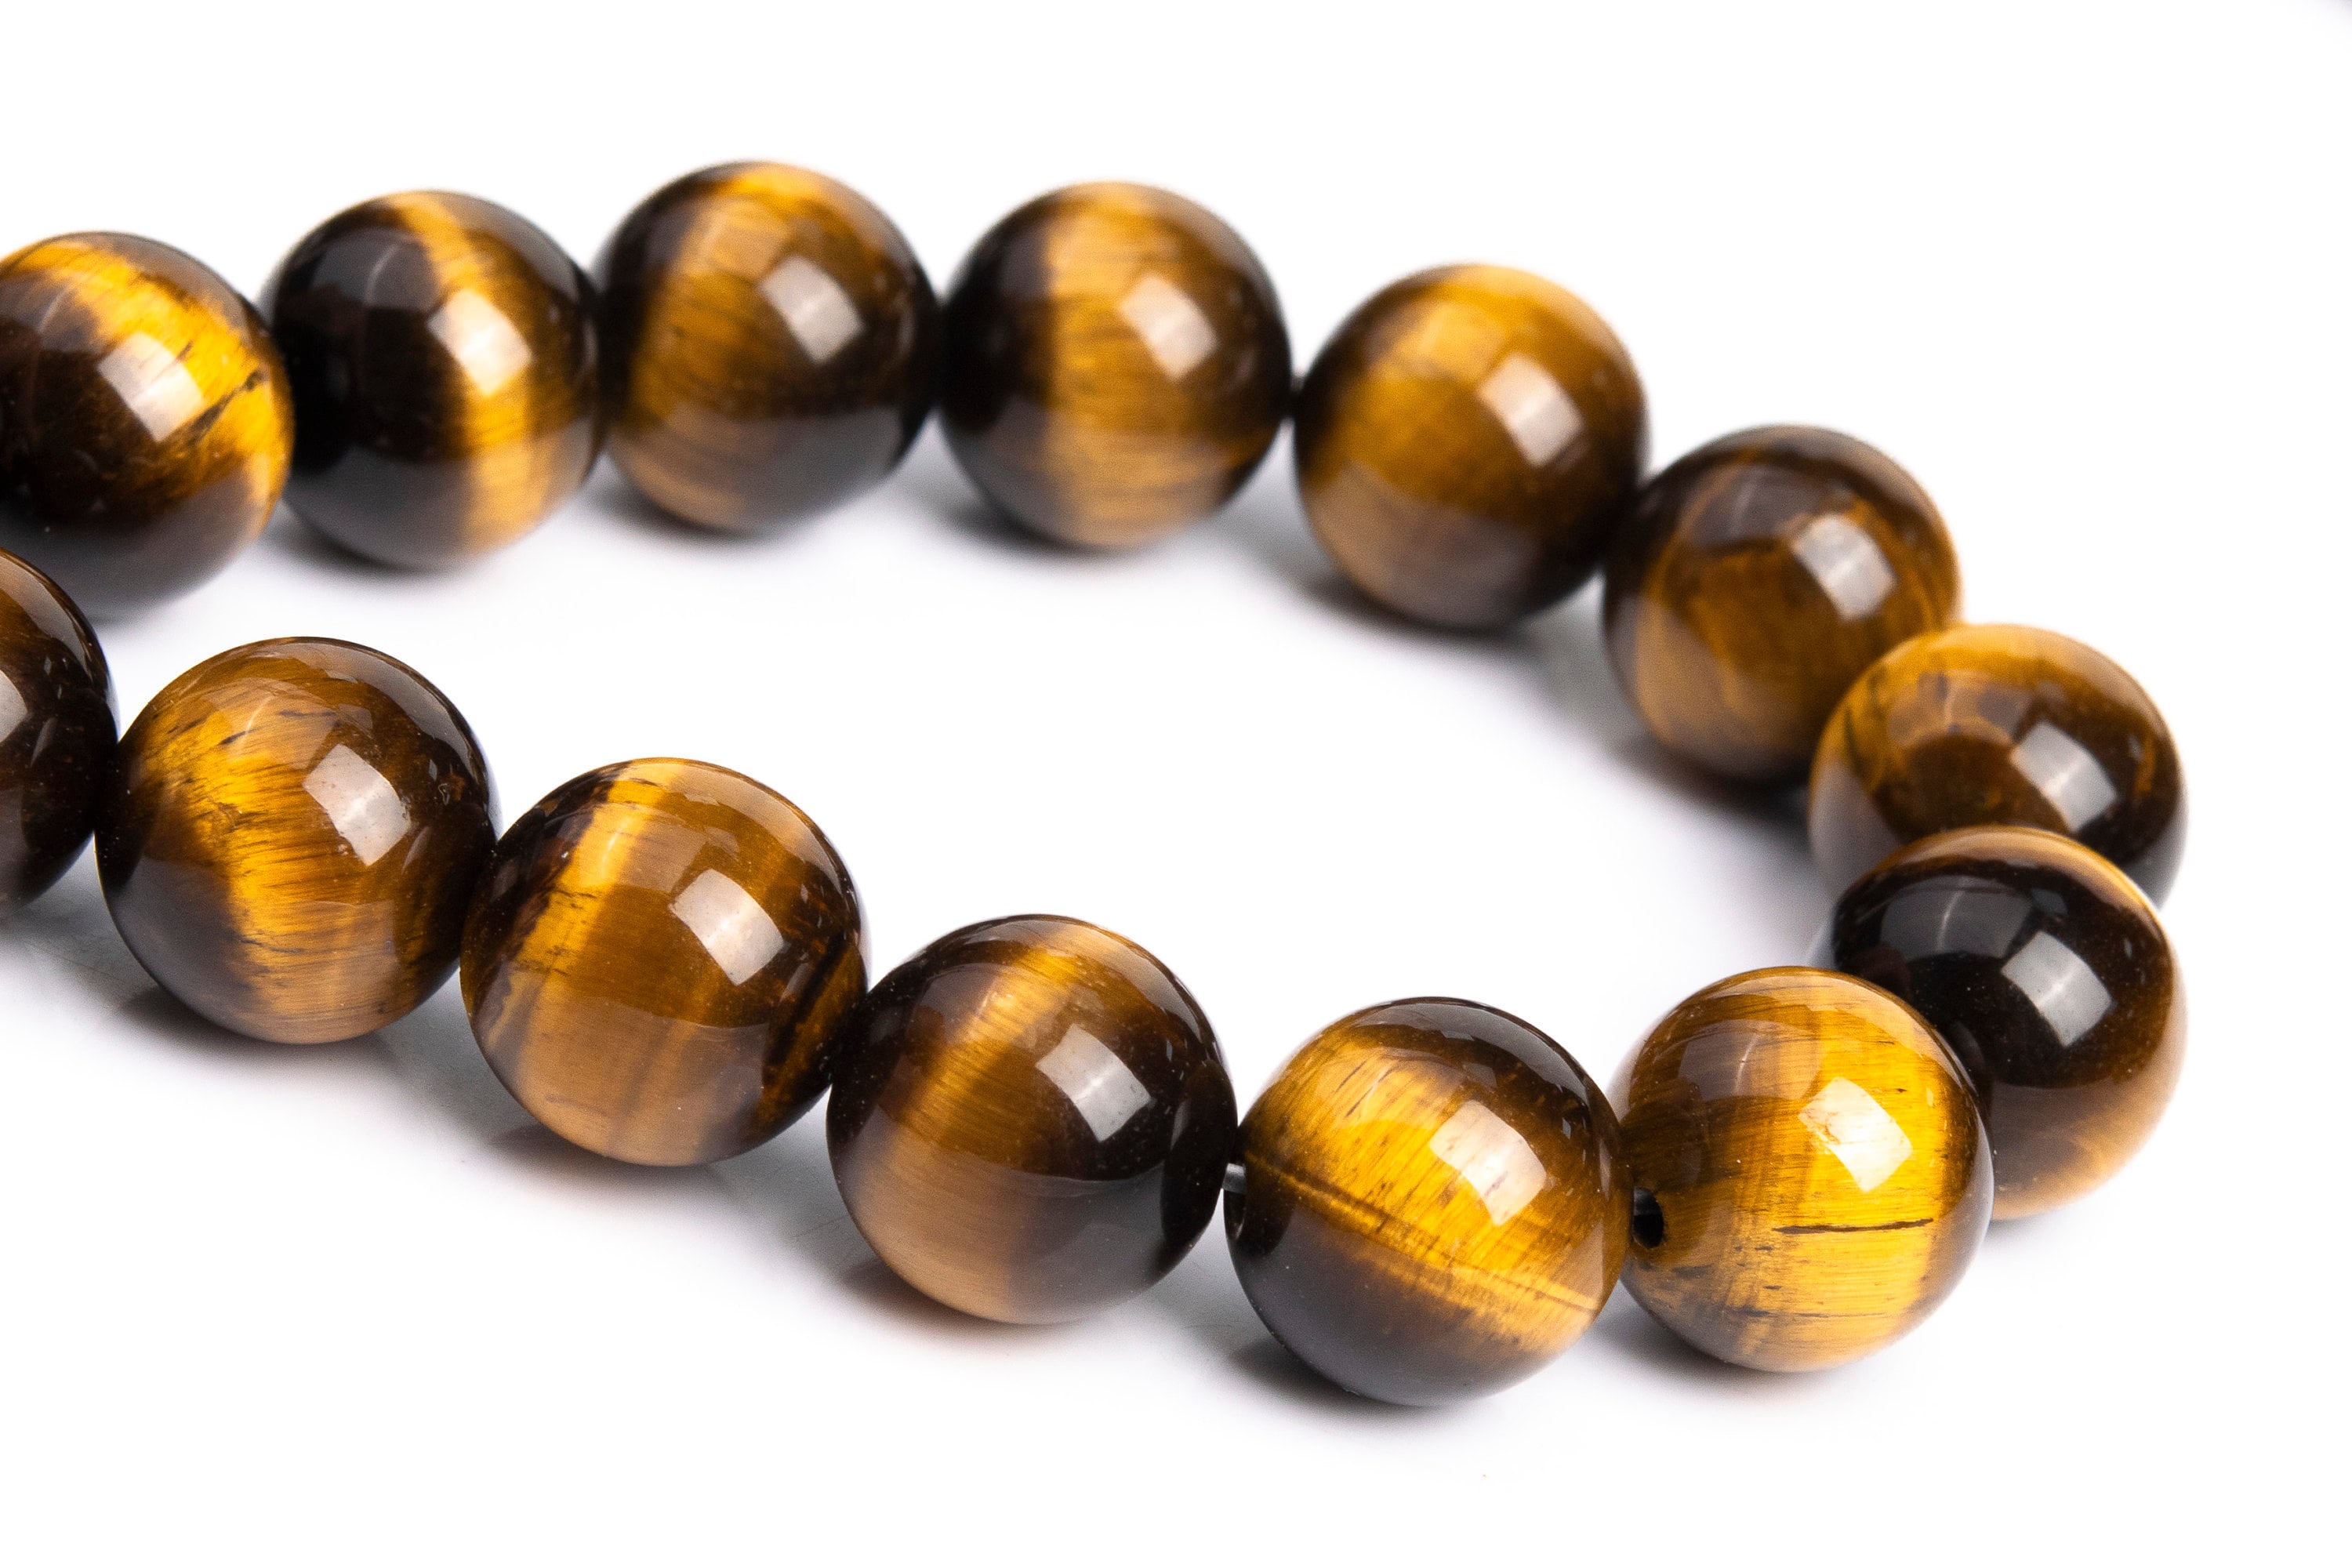 Natural Honey Gold Tiger Eye Beads, Grade AAA Gemstone Round Loose Beads 6mm 60pcs Bulk Lot Options, Semi Precious Stone Beads for Jewelry Making